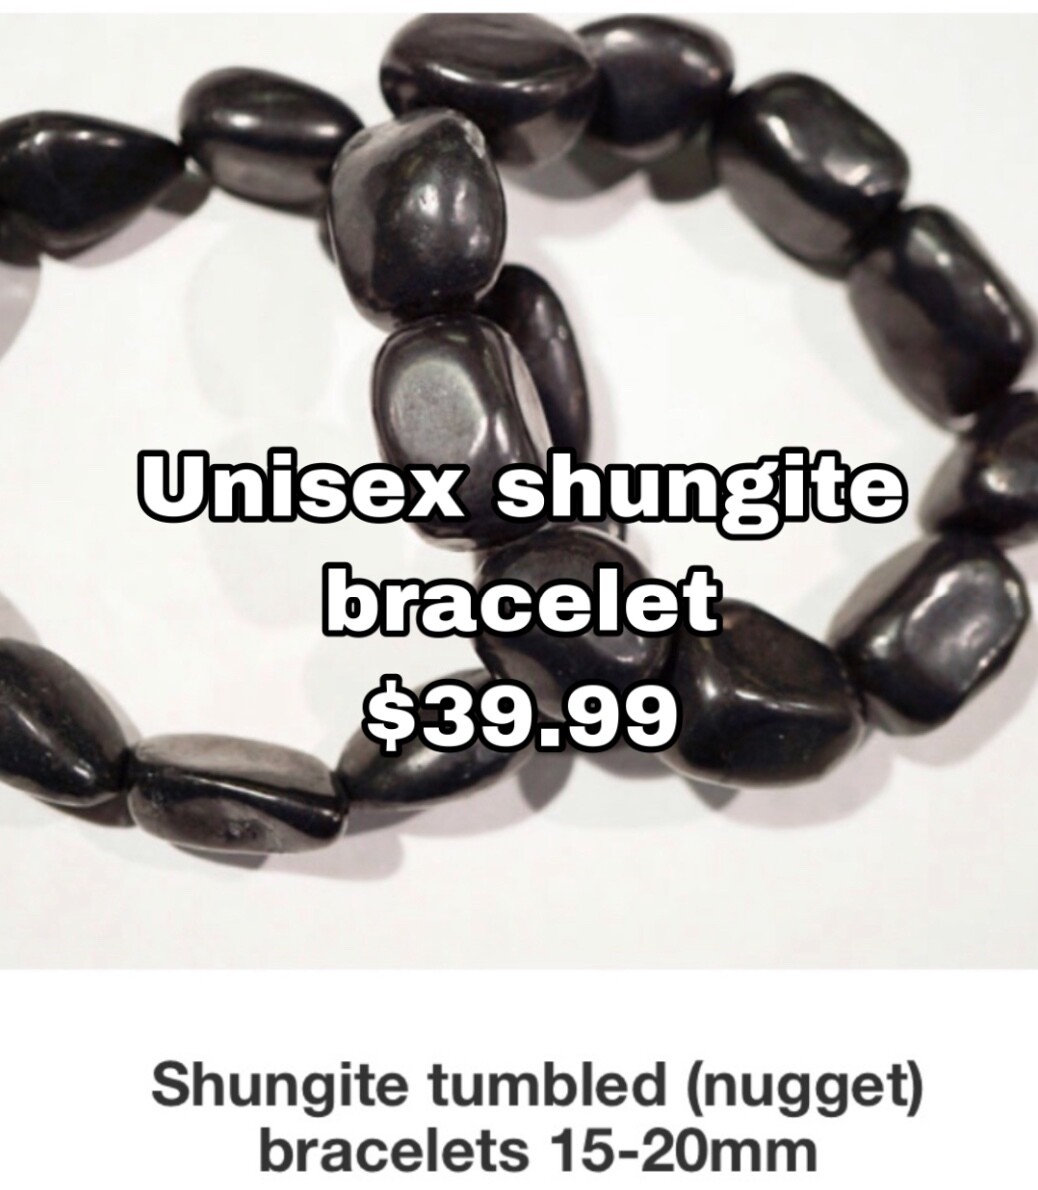 Unisex Shungite Bracelet.